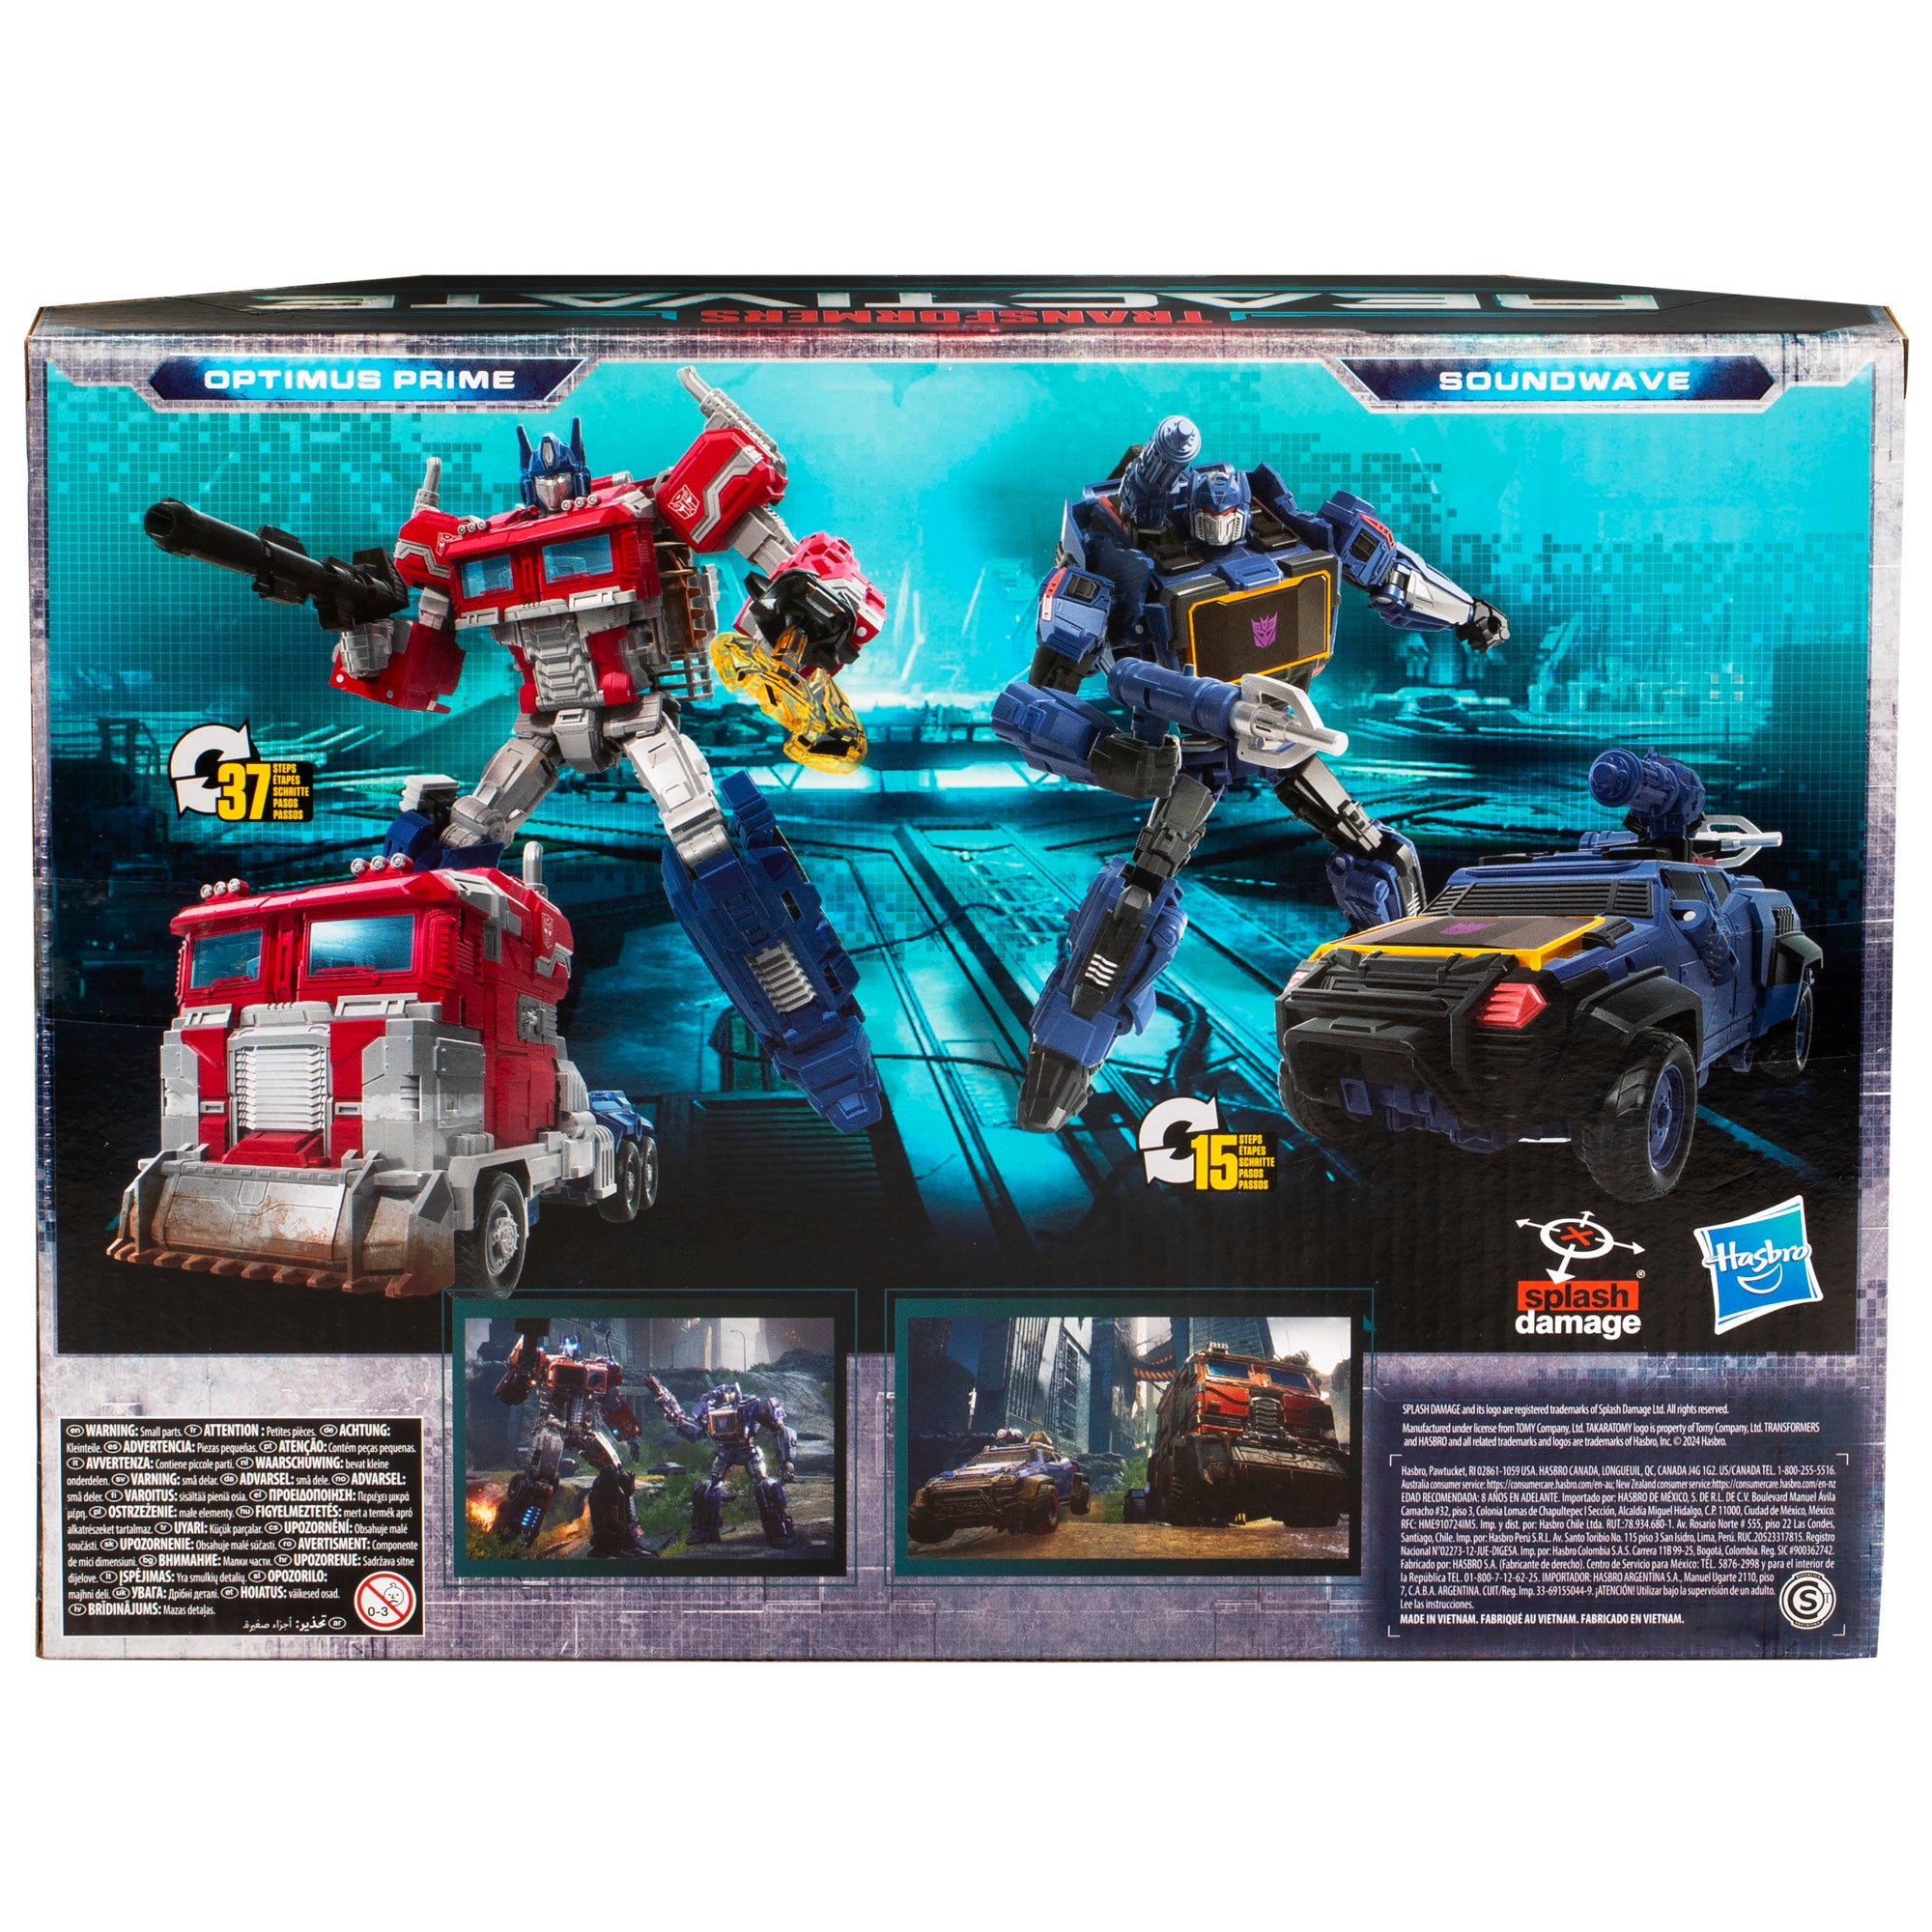 PRE-ORDER Transformers Reactivate Optimus Prime & Soundwave 2 Pack